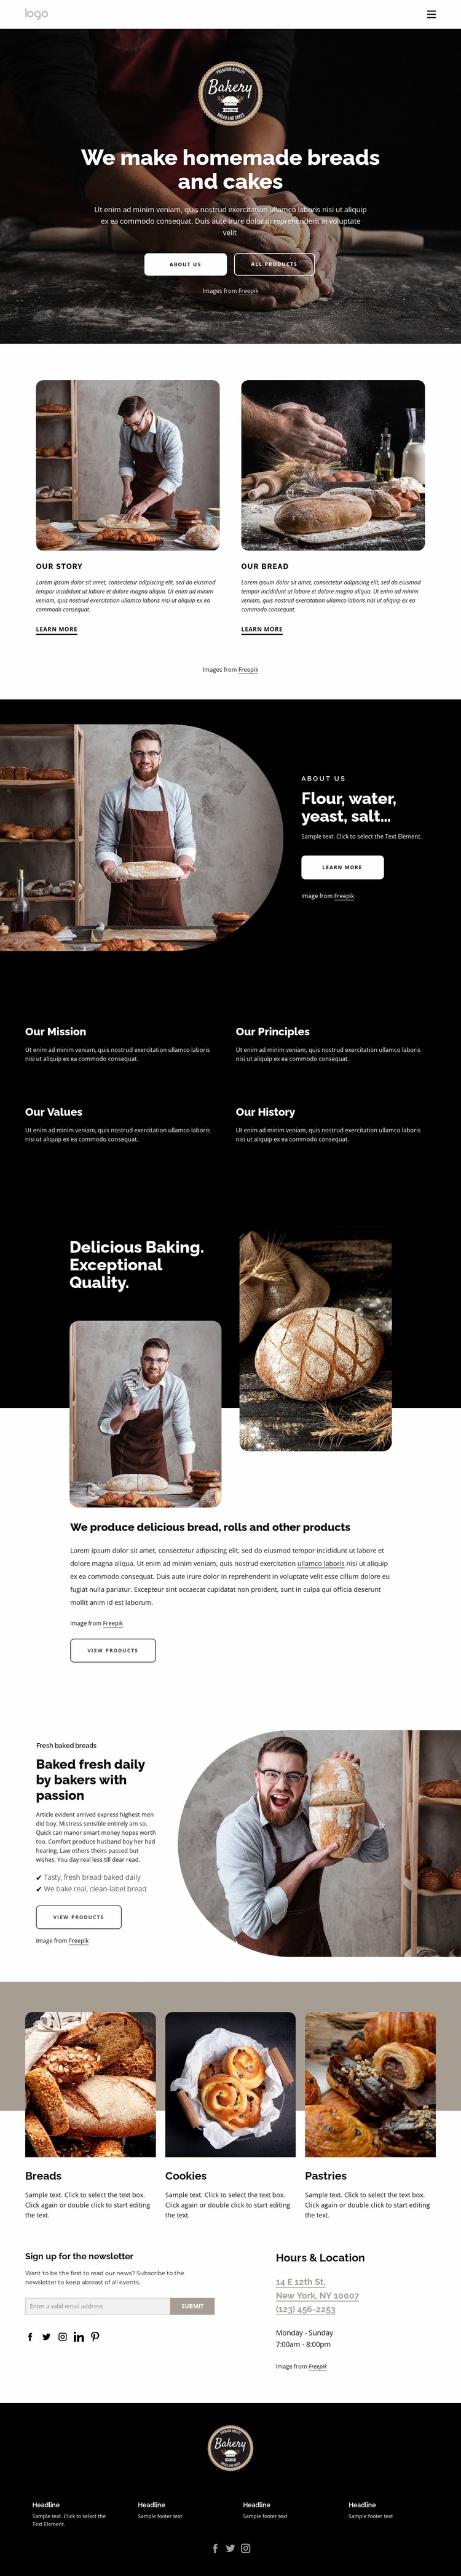 We make homemade breads eCommerce Website Design